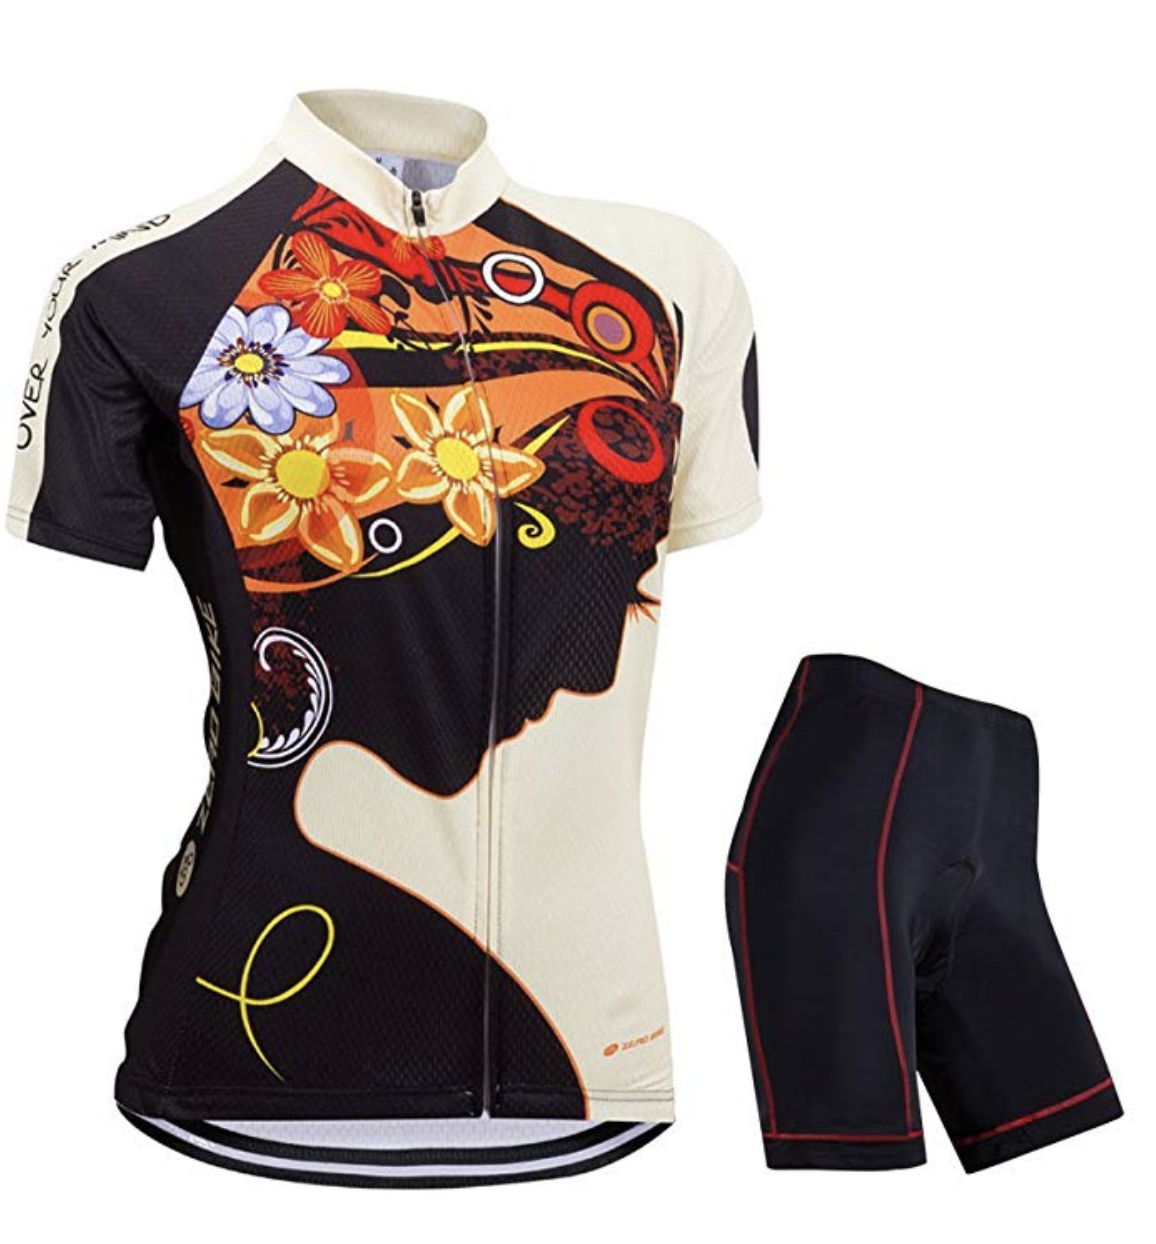 Zerobike Short Sleeve Women's Cycling Jersey